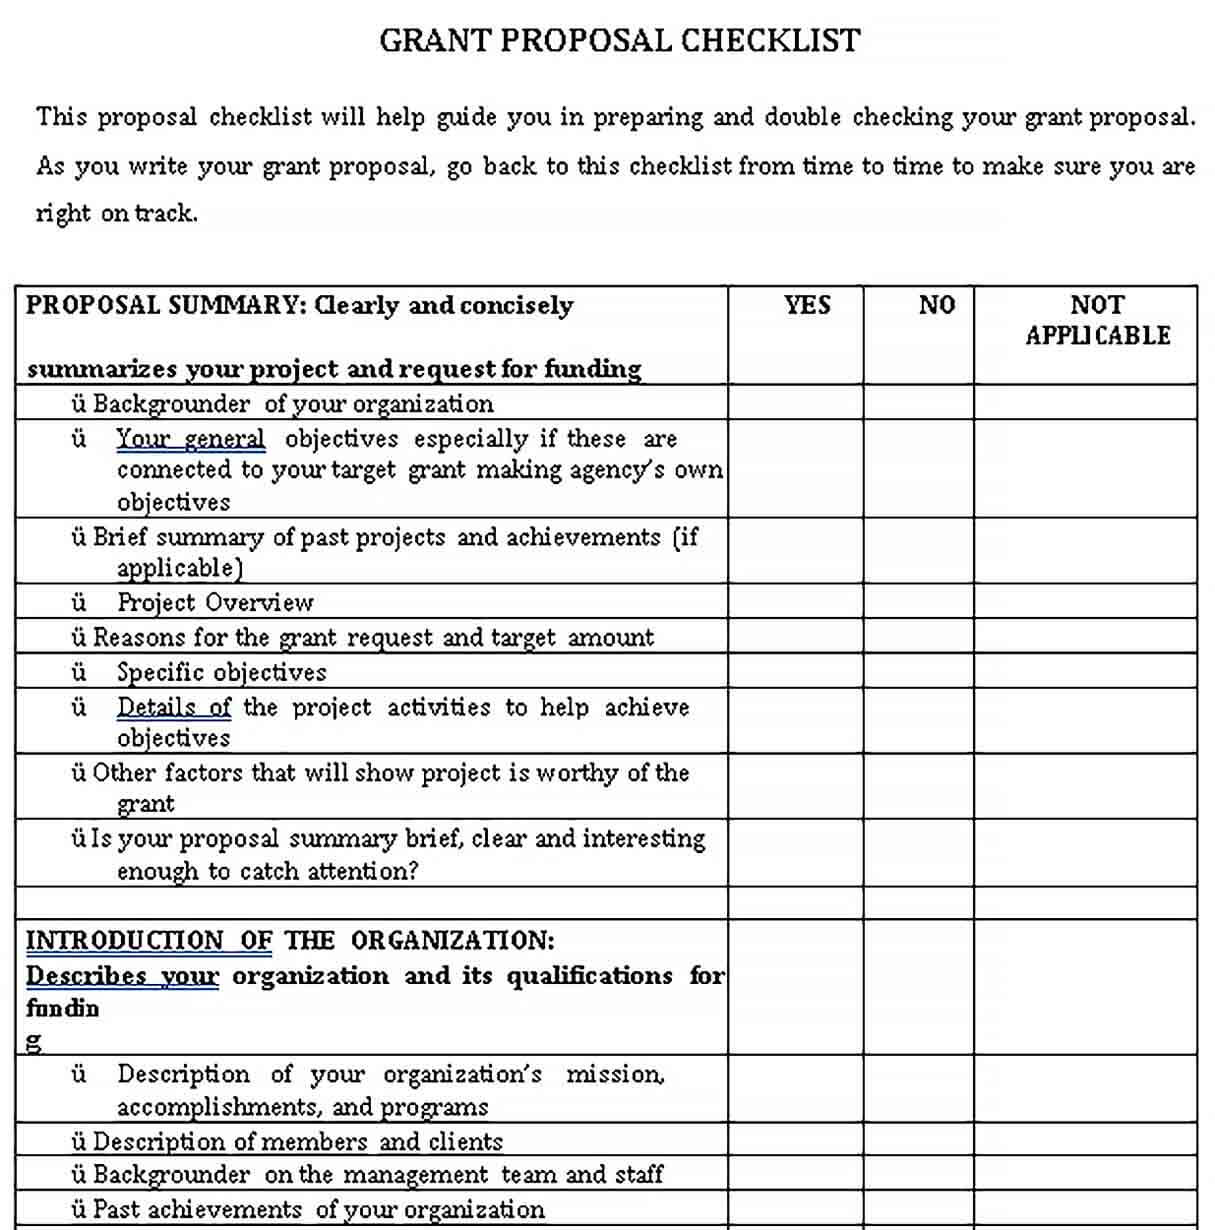 Sample Grant Proposal Checklist Template